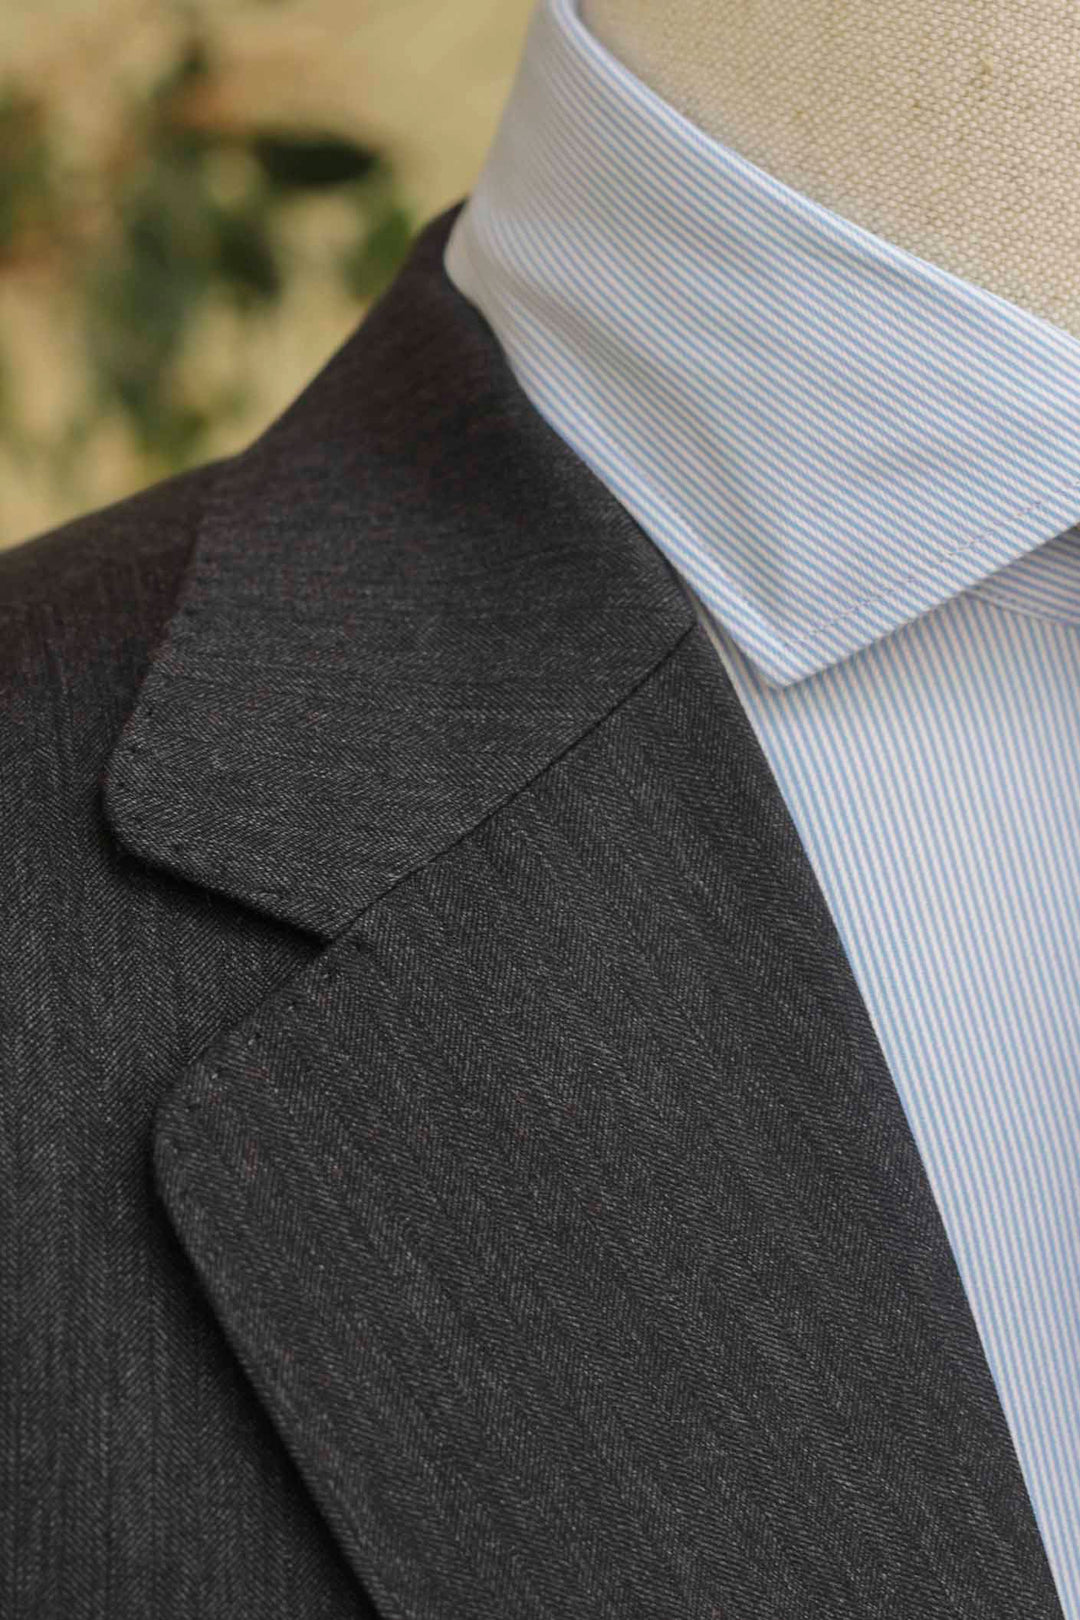 2 Piece Charcoal Gray Herringbone Suit